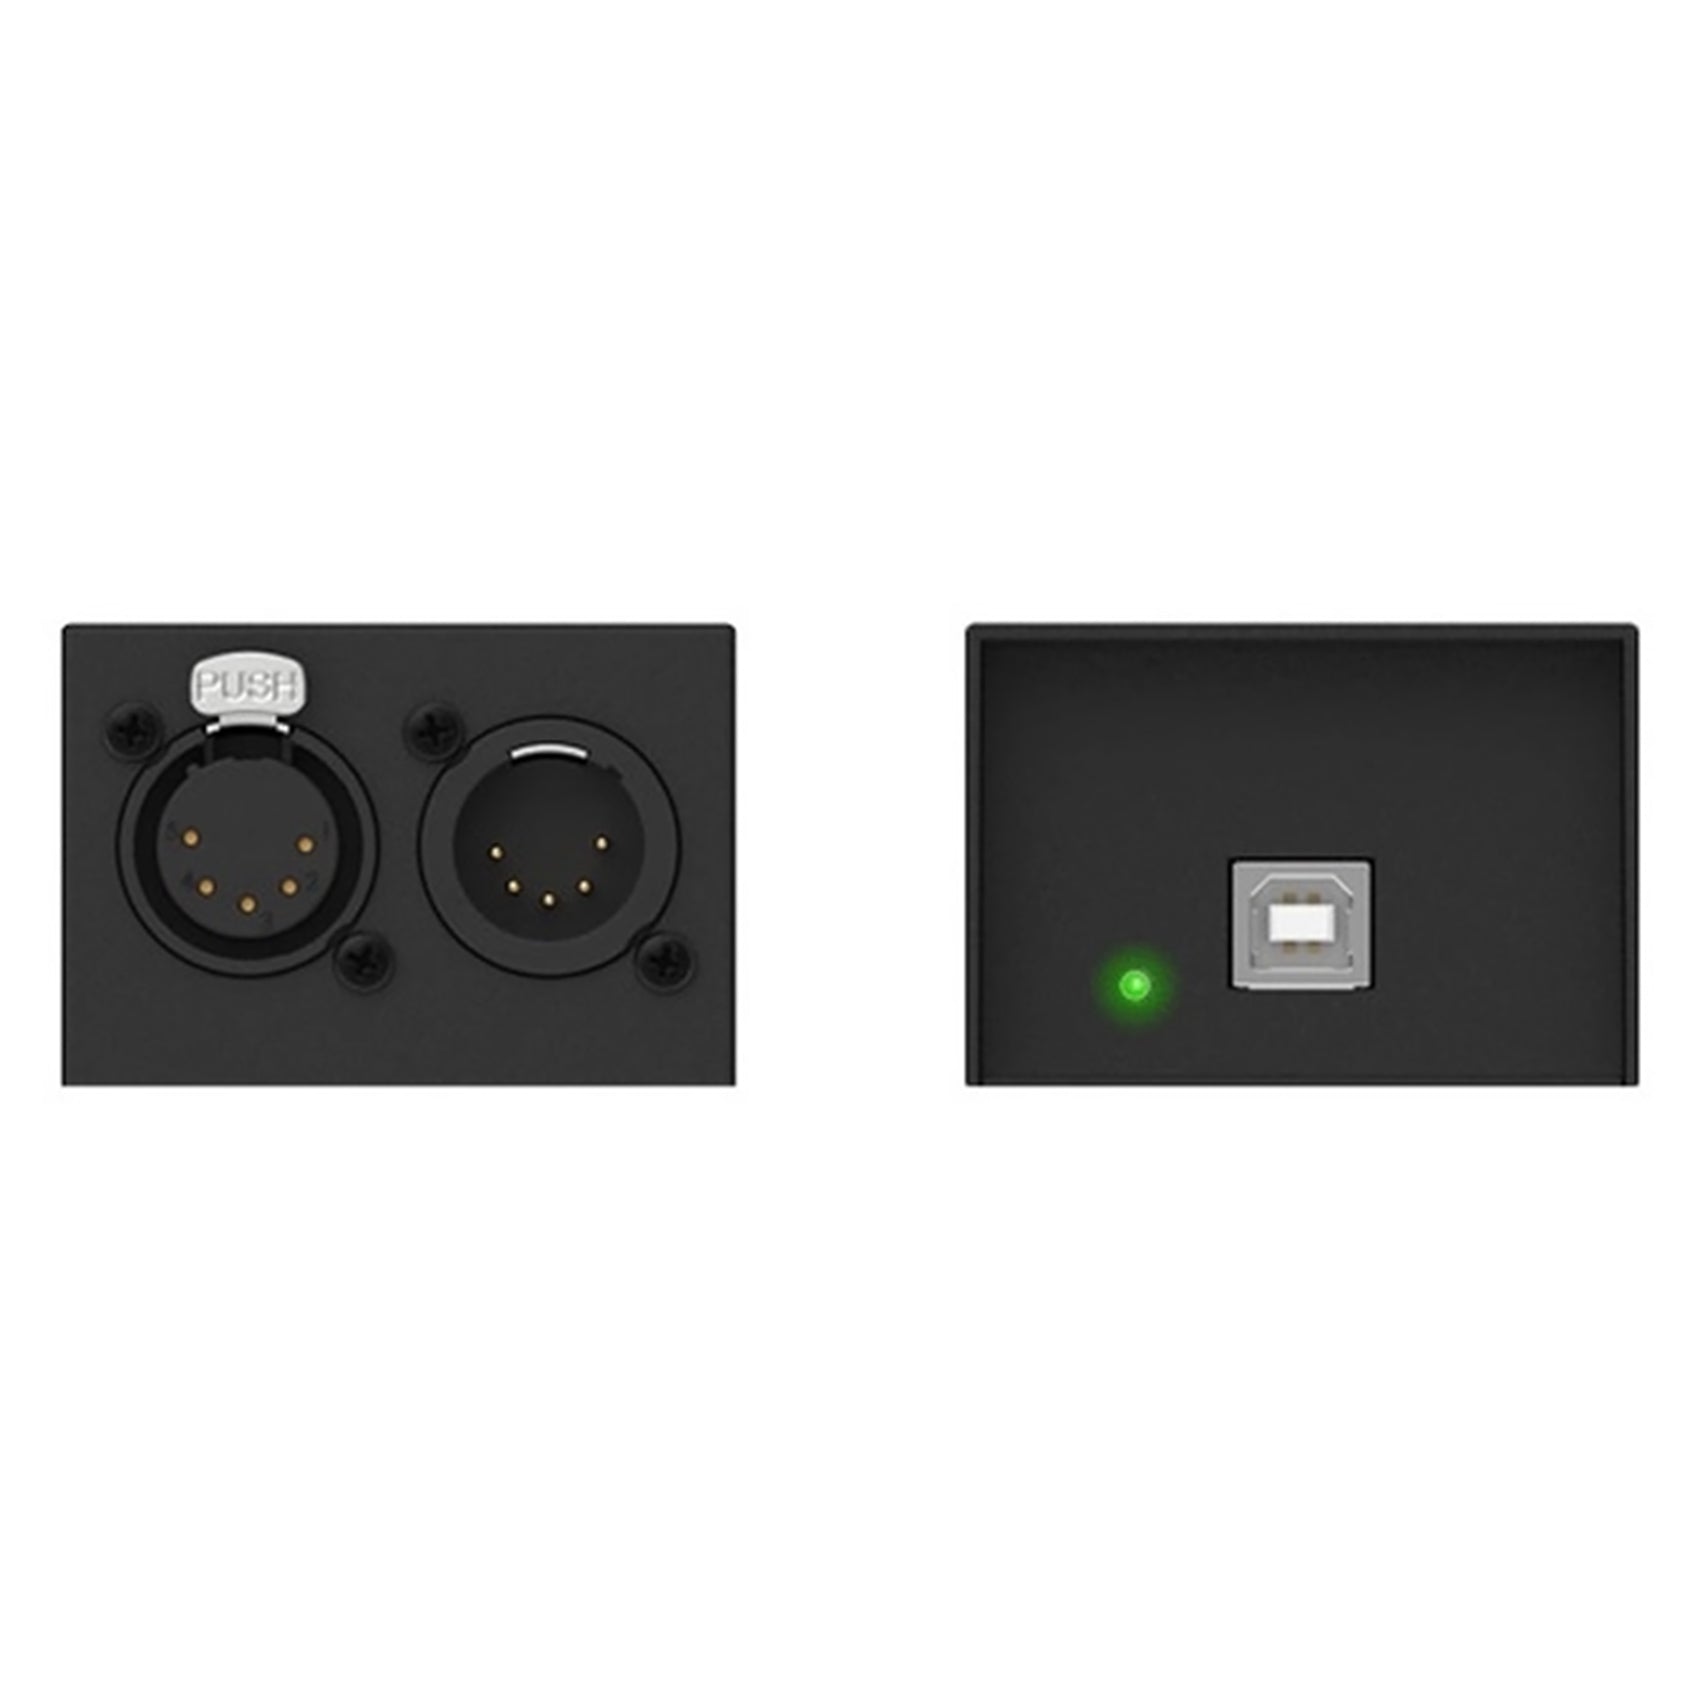 DMX USB Pro DMX Controller - Black (70304) for sale online